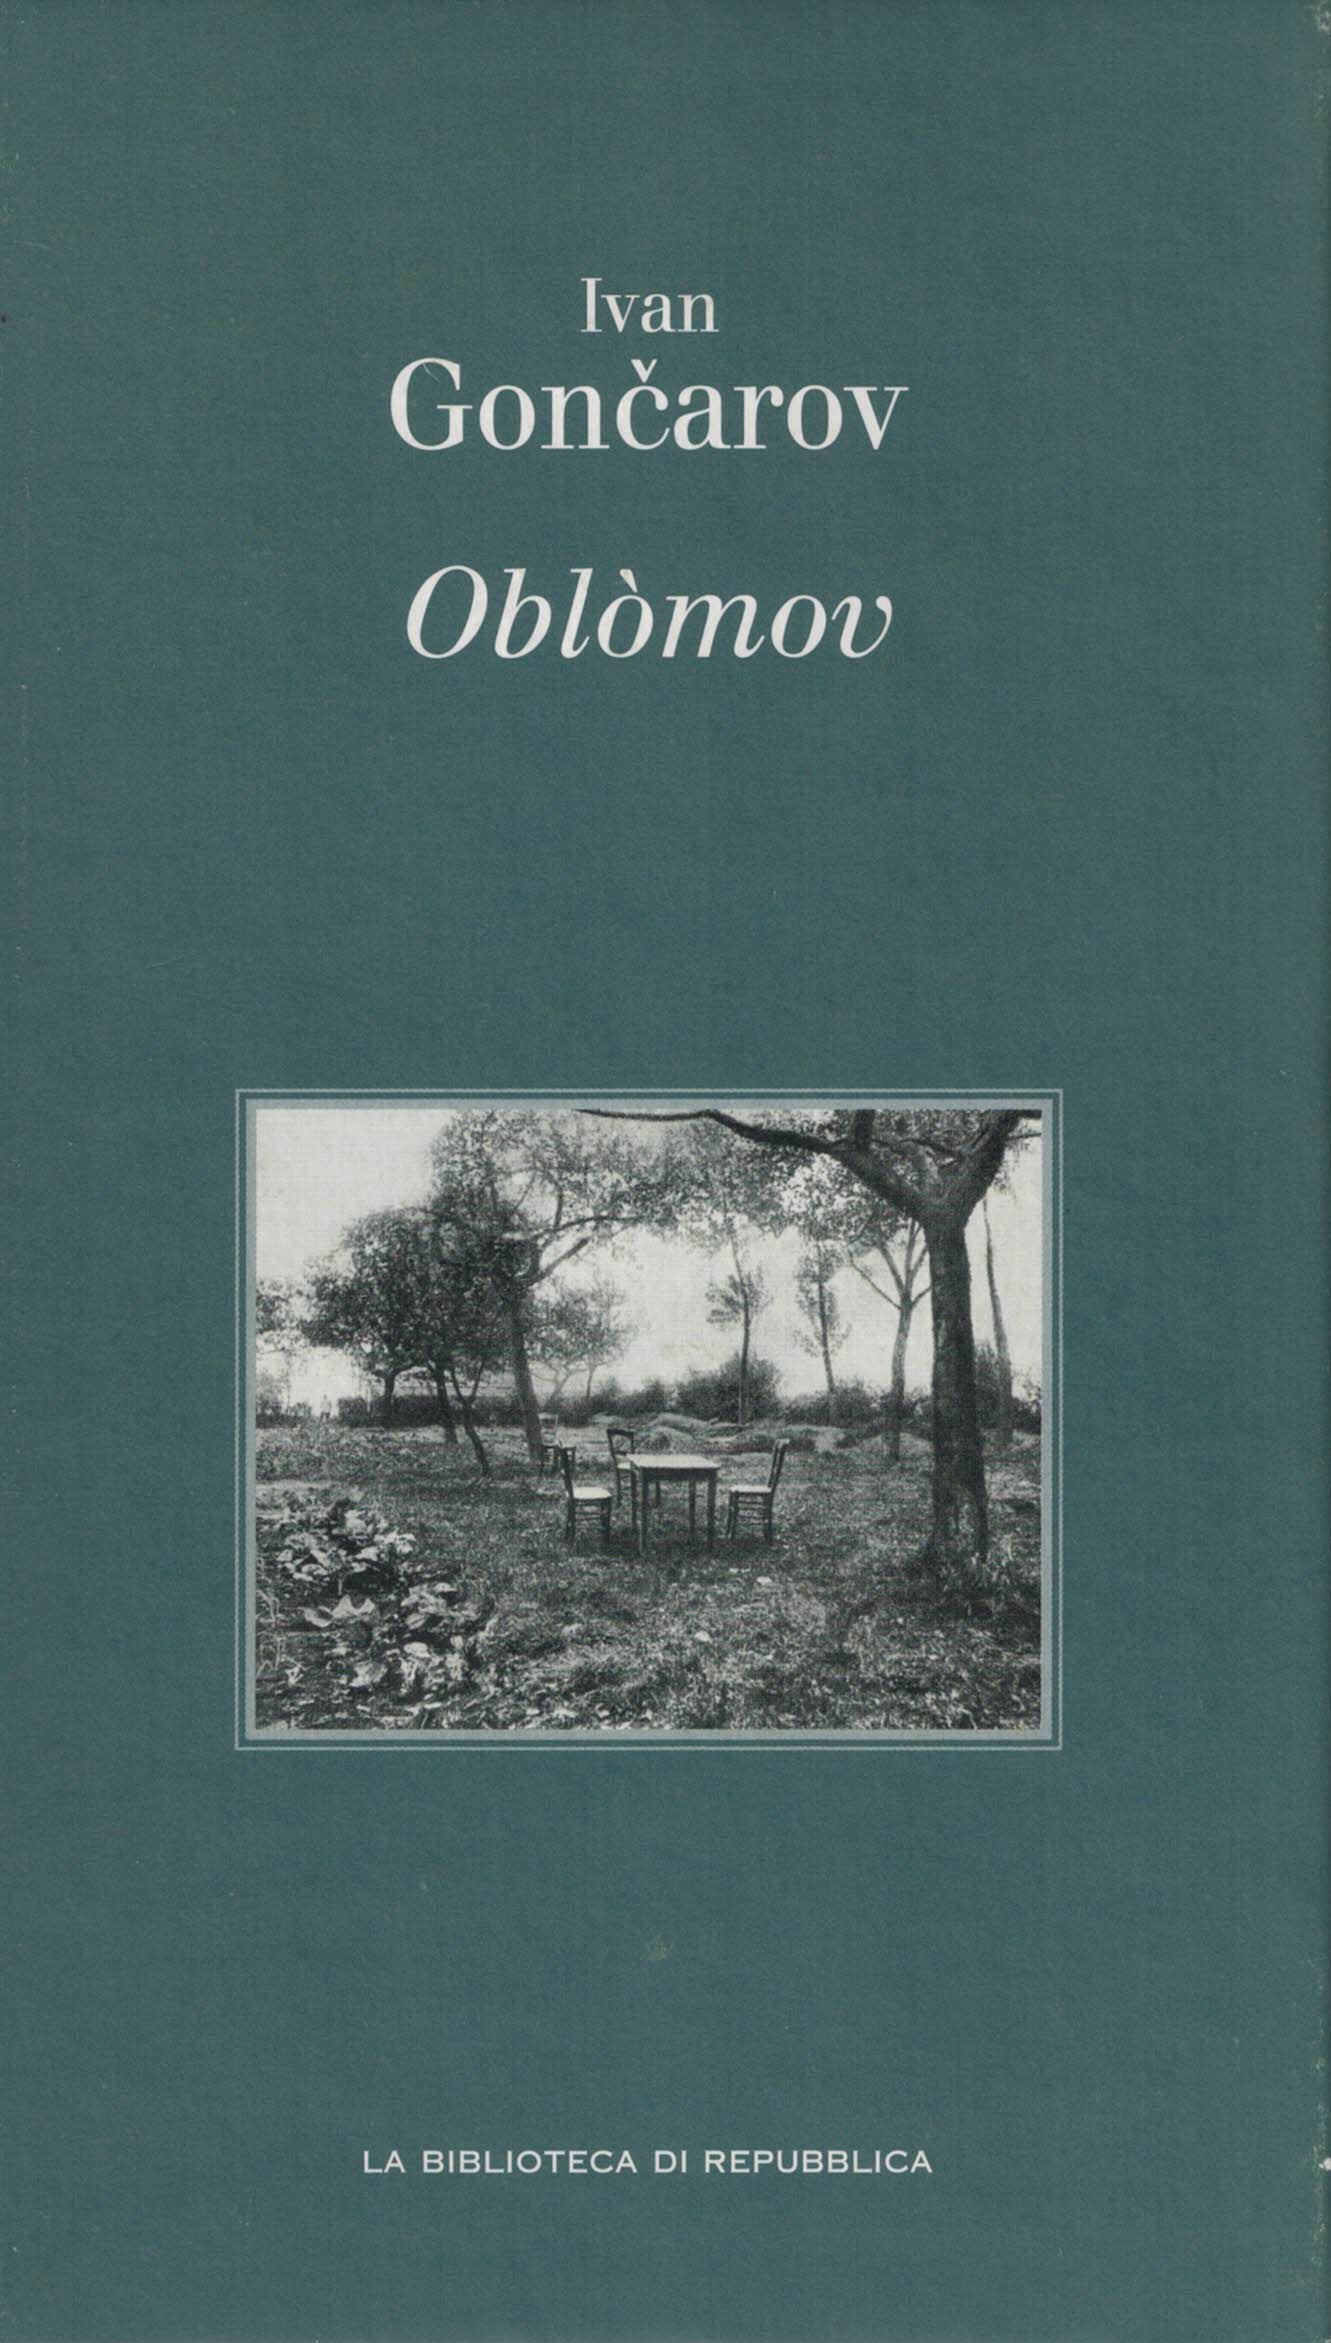 Copertina di Oblòmov